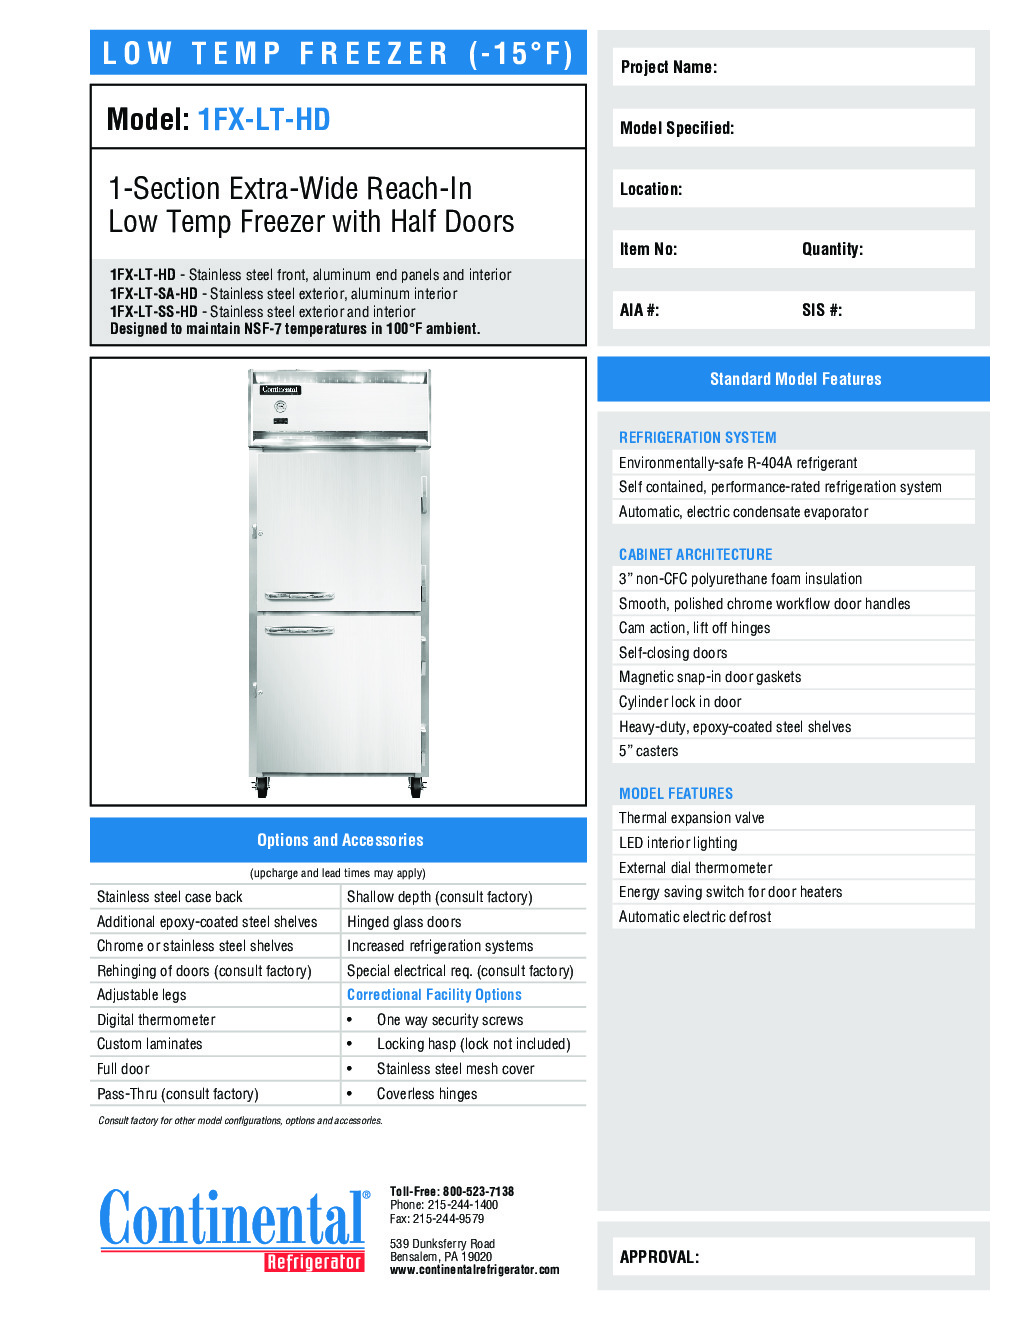 Continental Refrigerator 1FX-LT-HD Reach-In Low Temperature Freezer